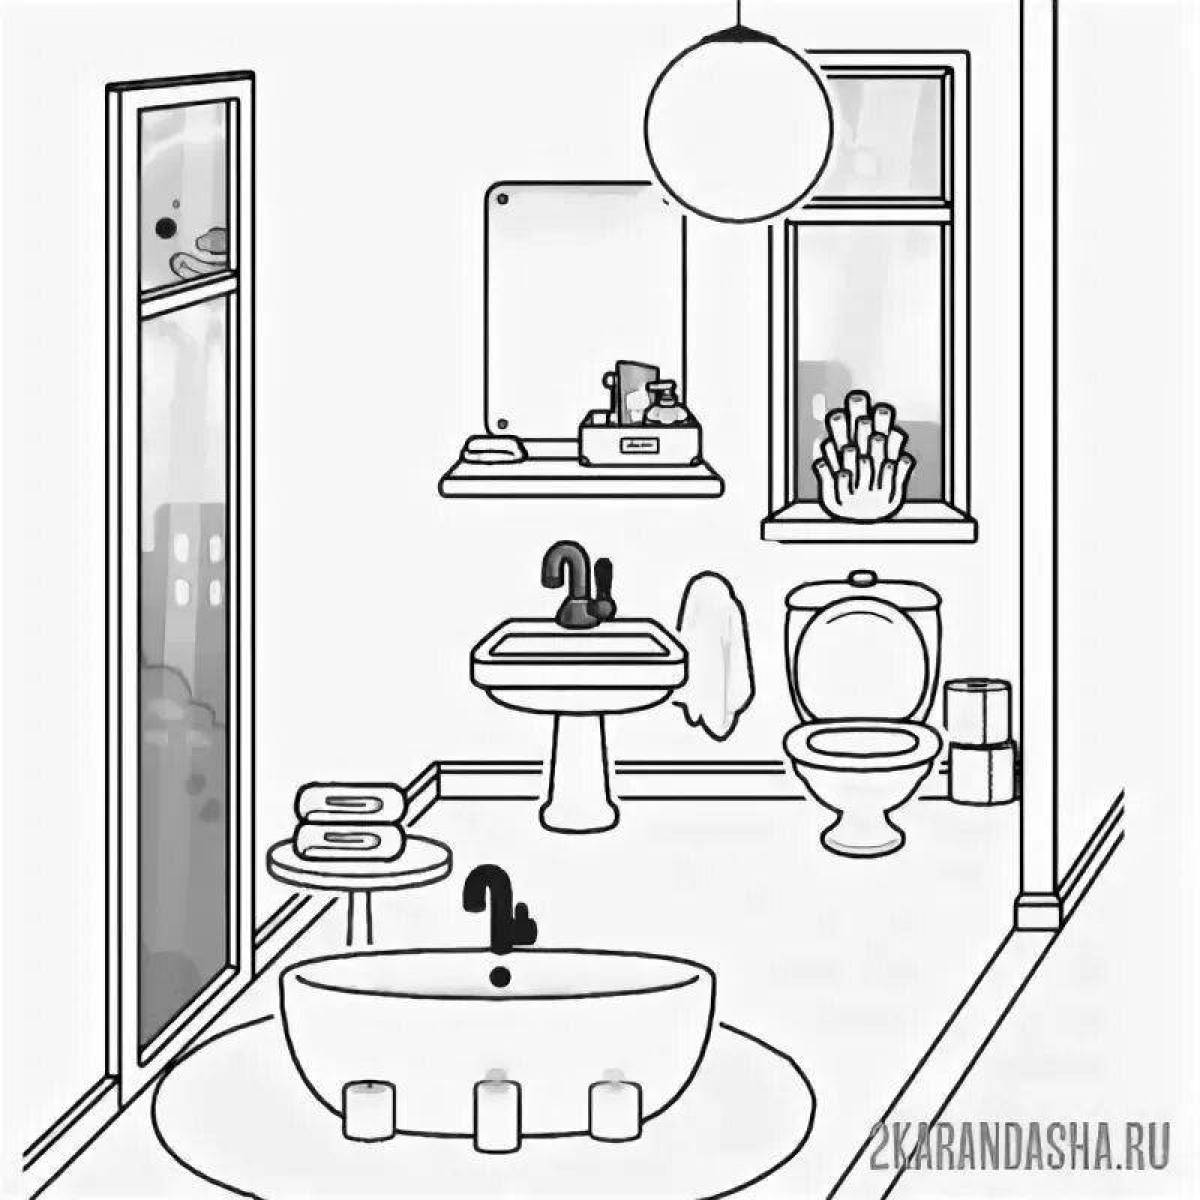 Great coloring page for Toka Boca's bathroom